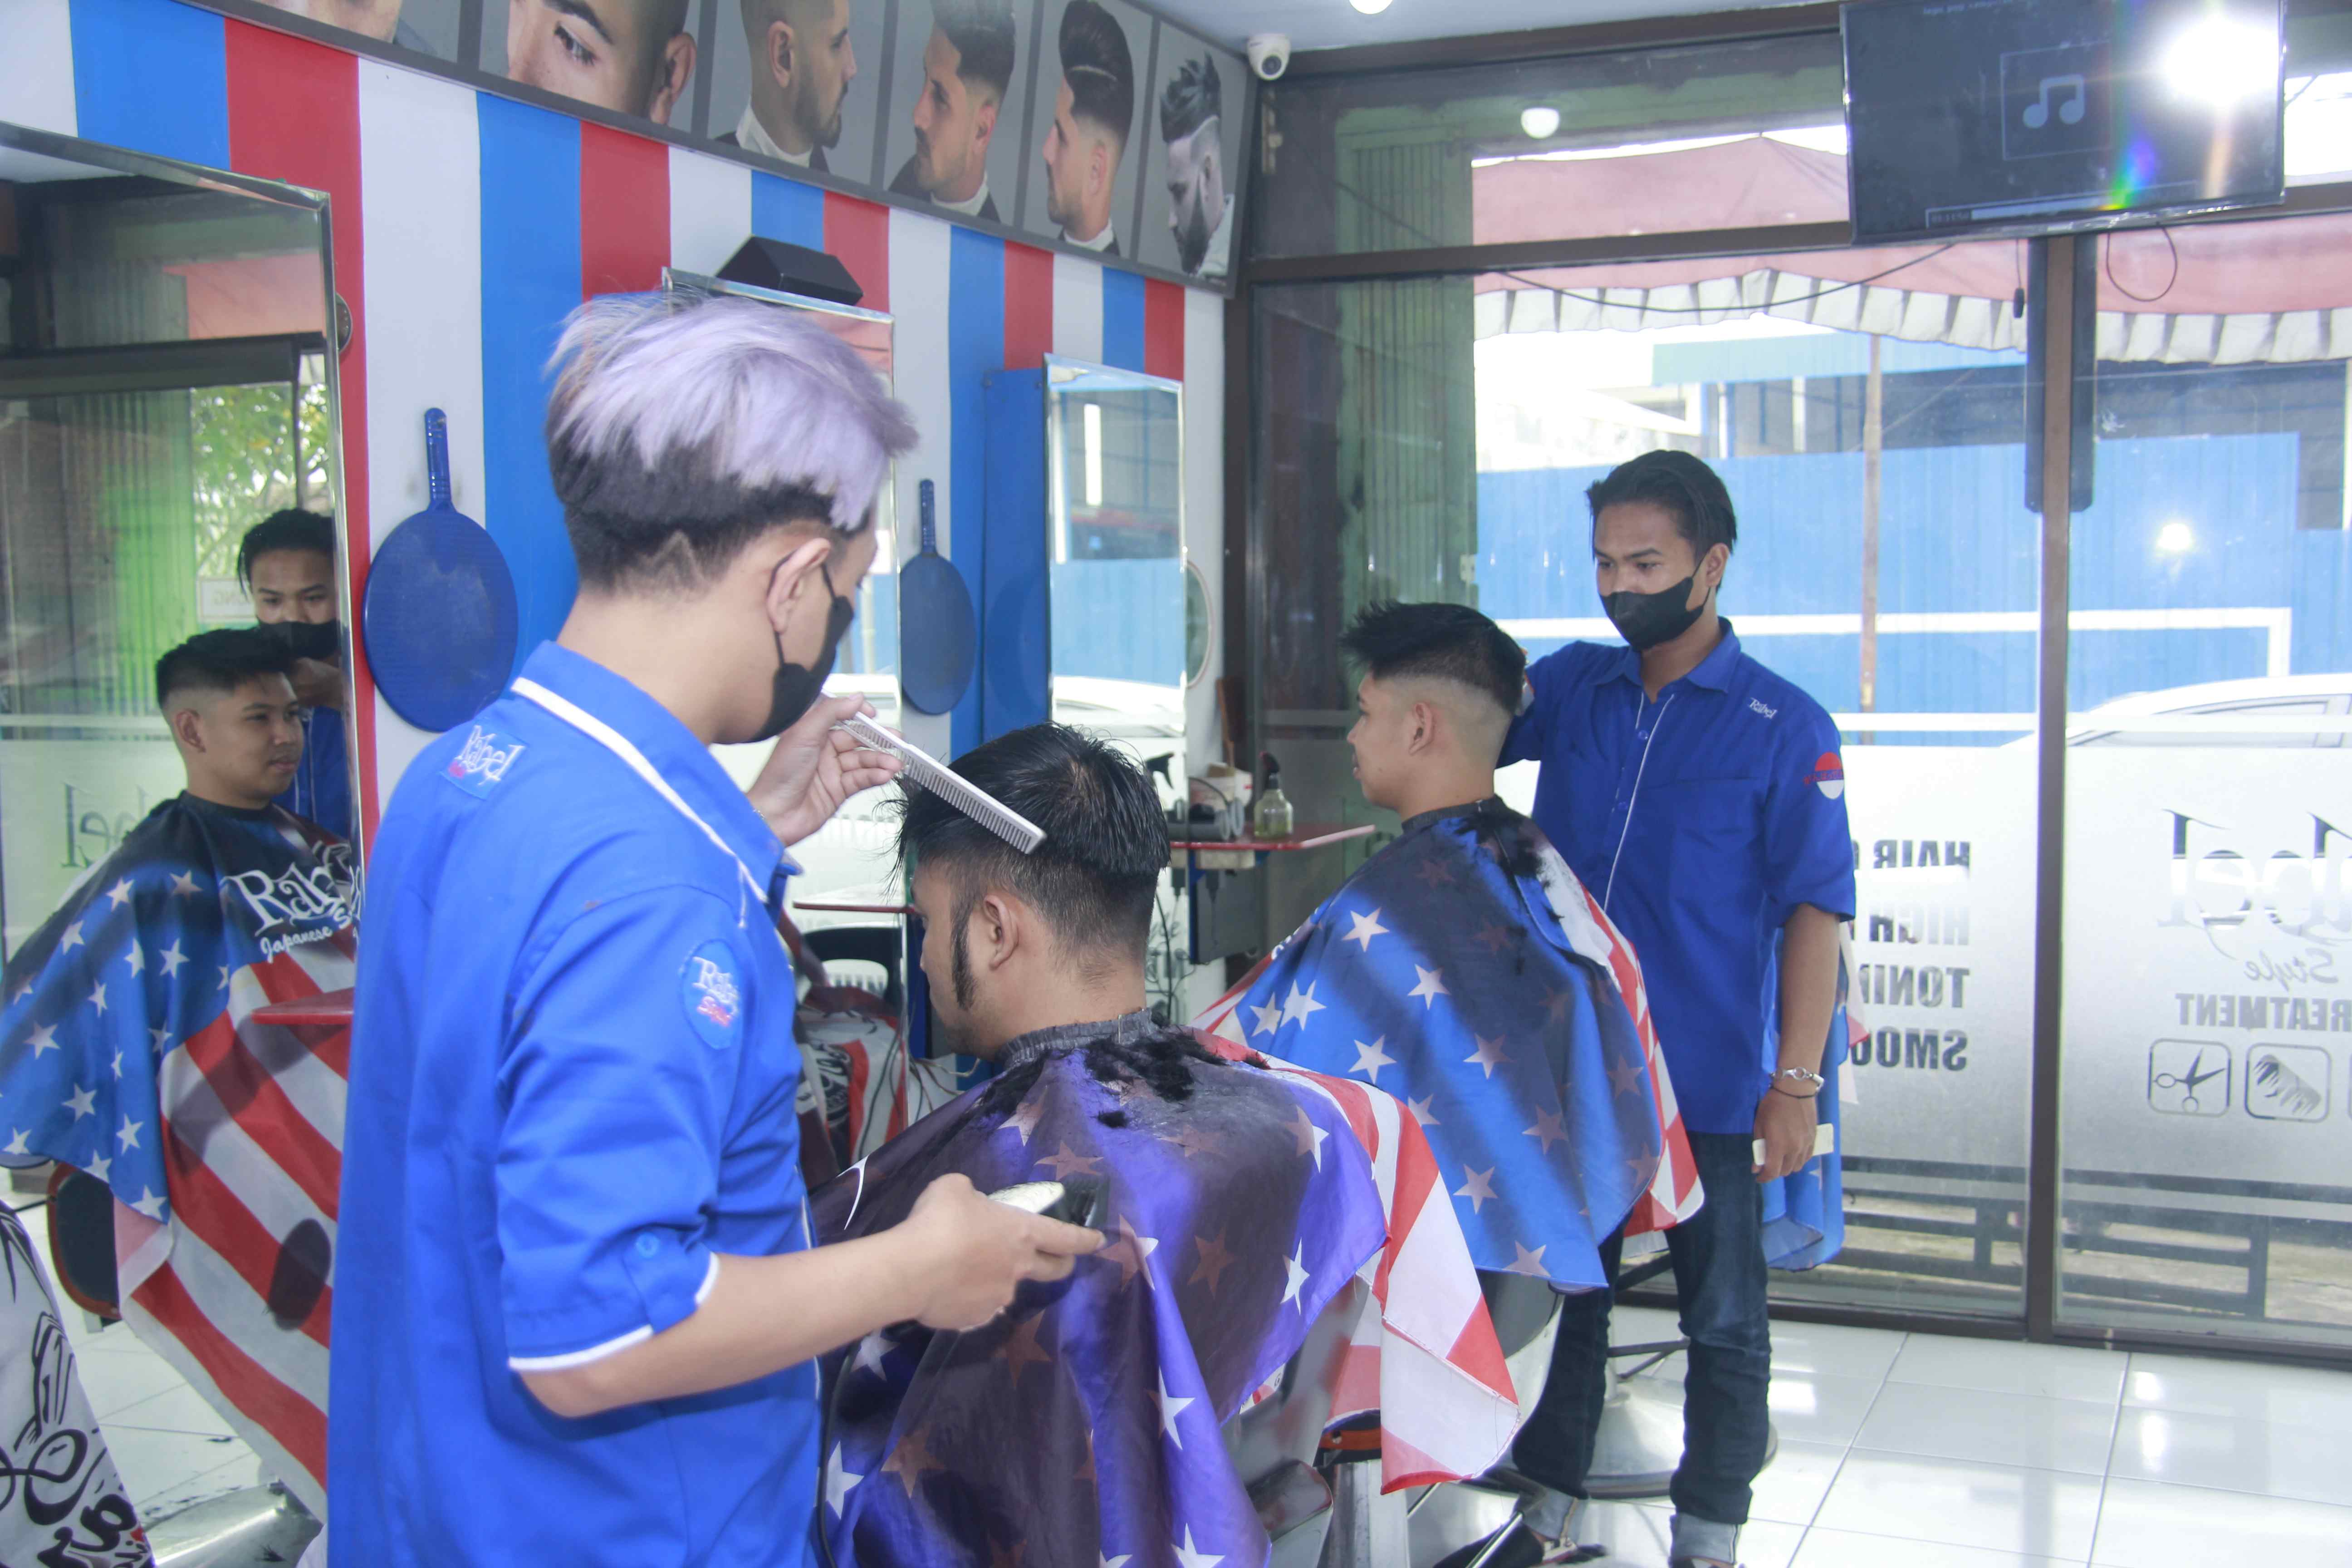 Harga Pangkas Rambut Di Jl. Tumenggung Suryo 2023